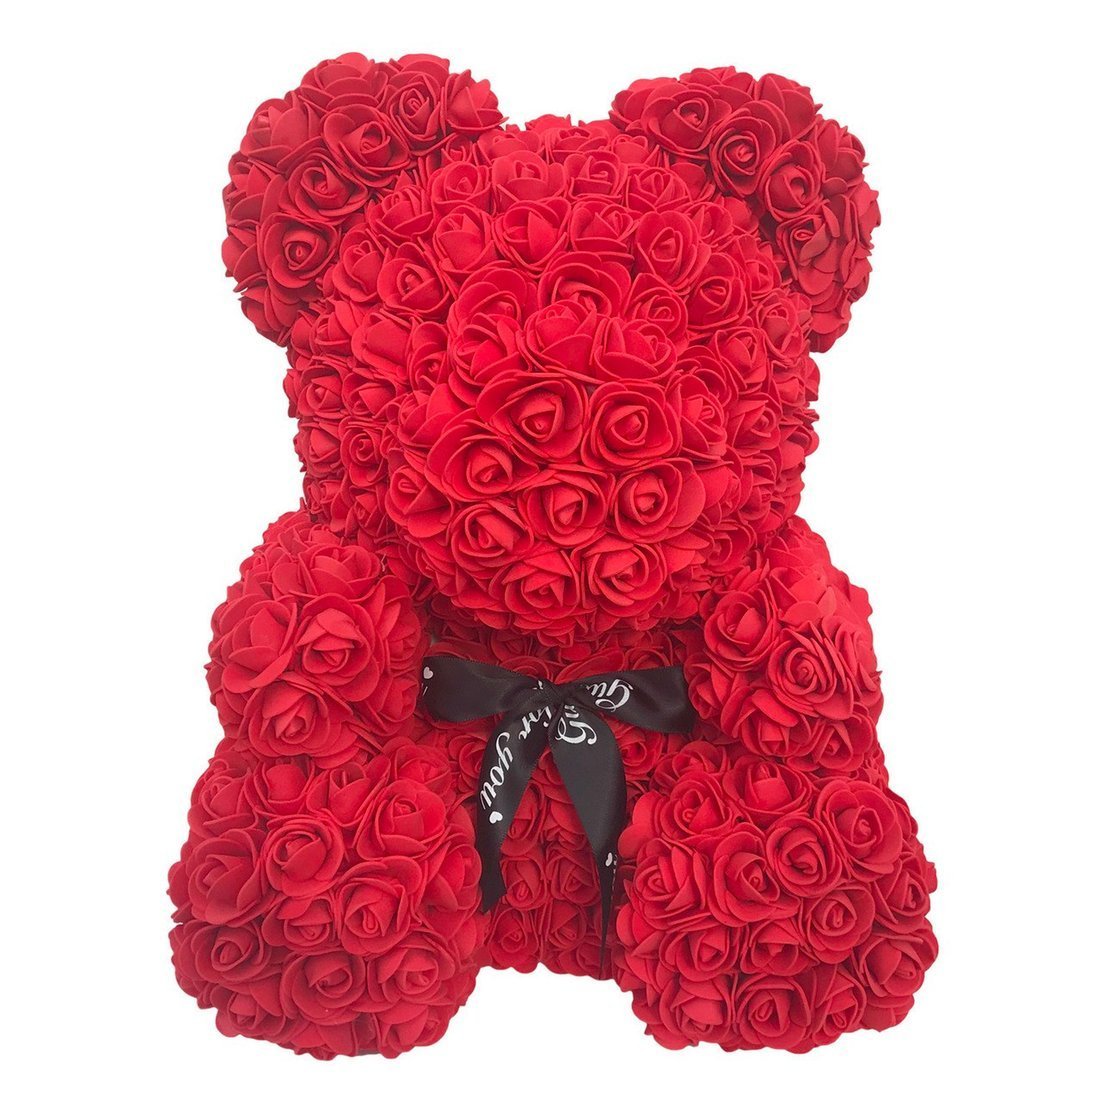 rose teddy bear fast shipping